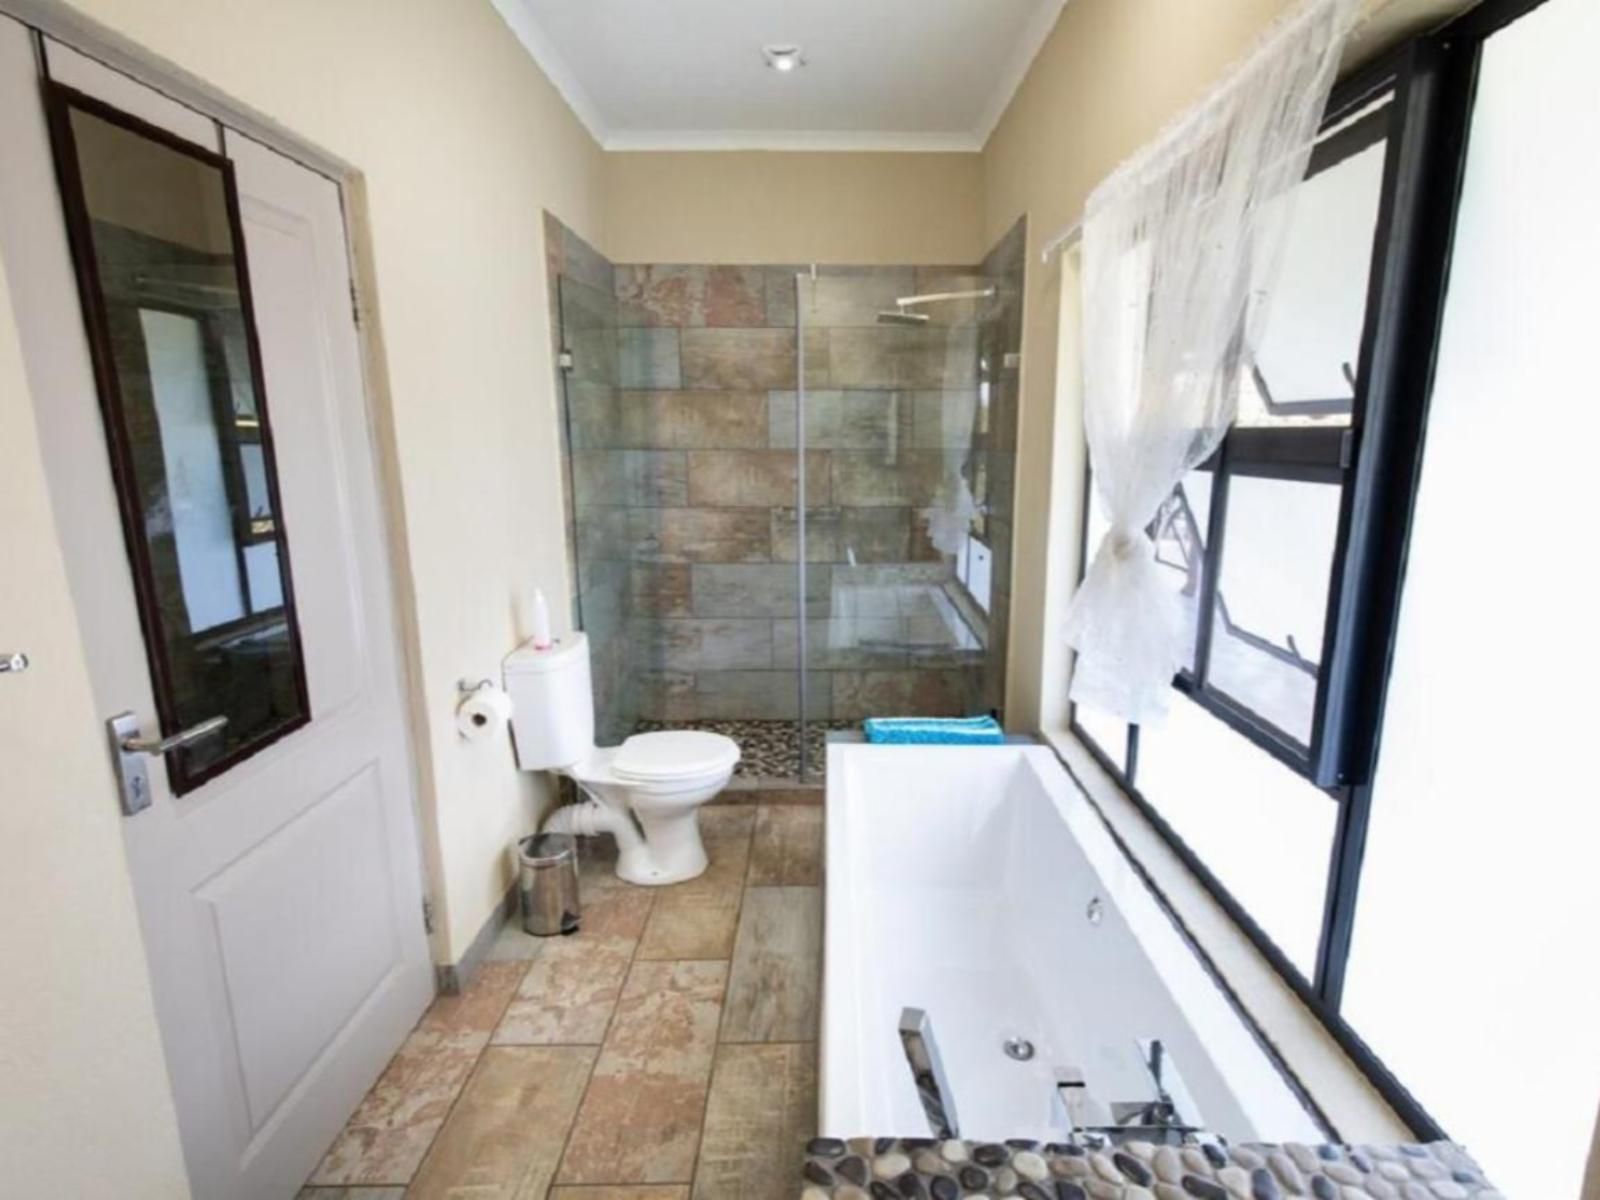 The Belgium Inn Hoedspruit Limpopo Province South Africa Bathroom